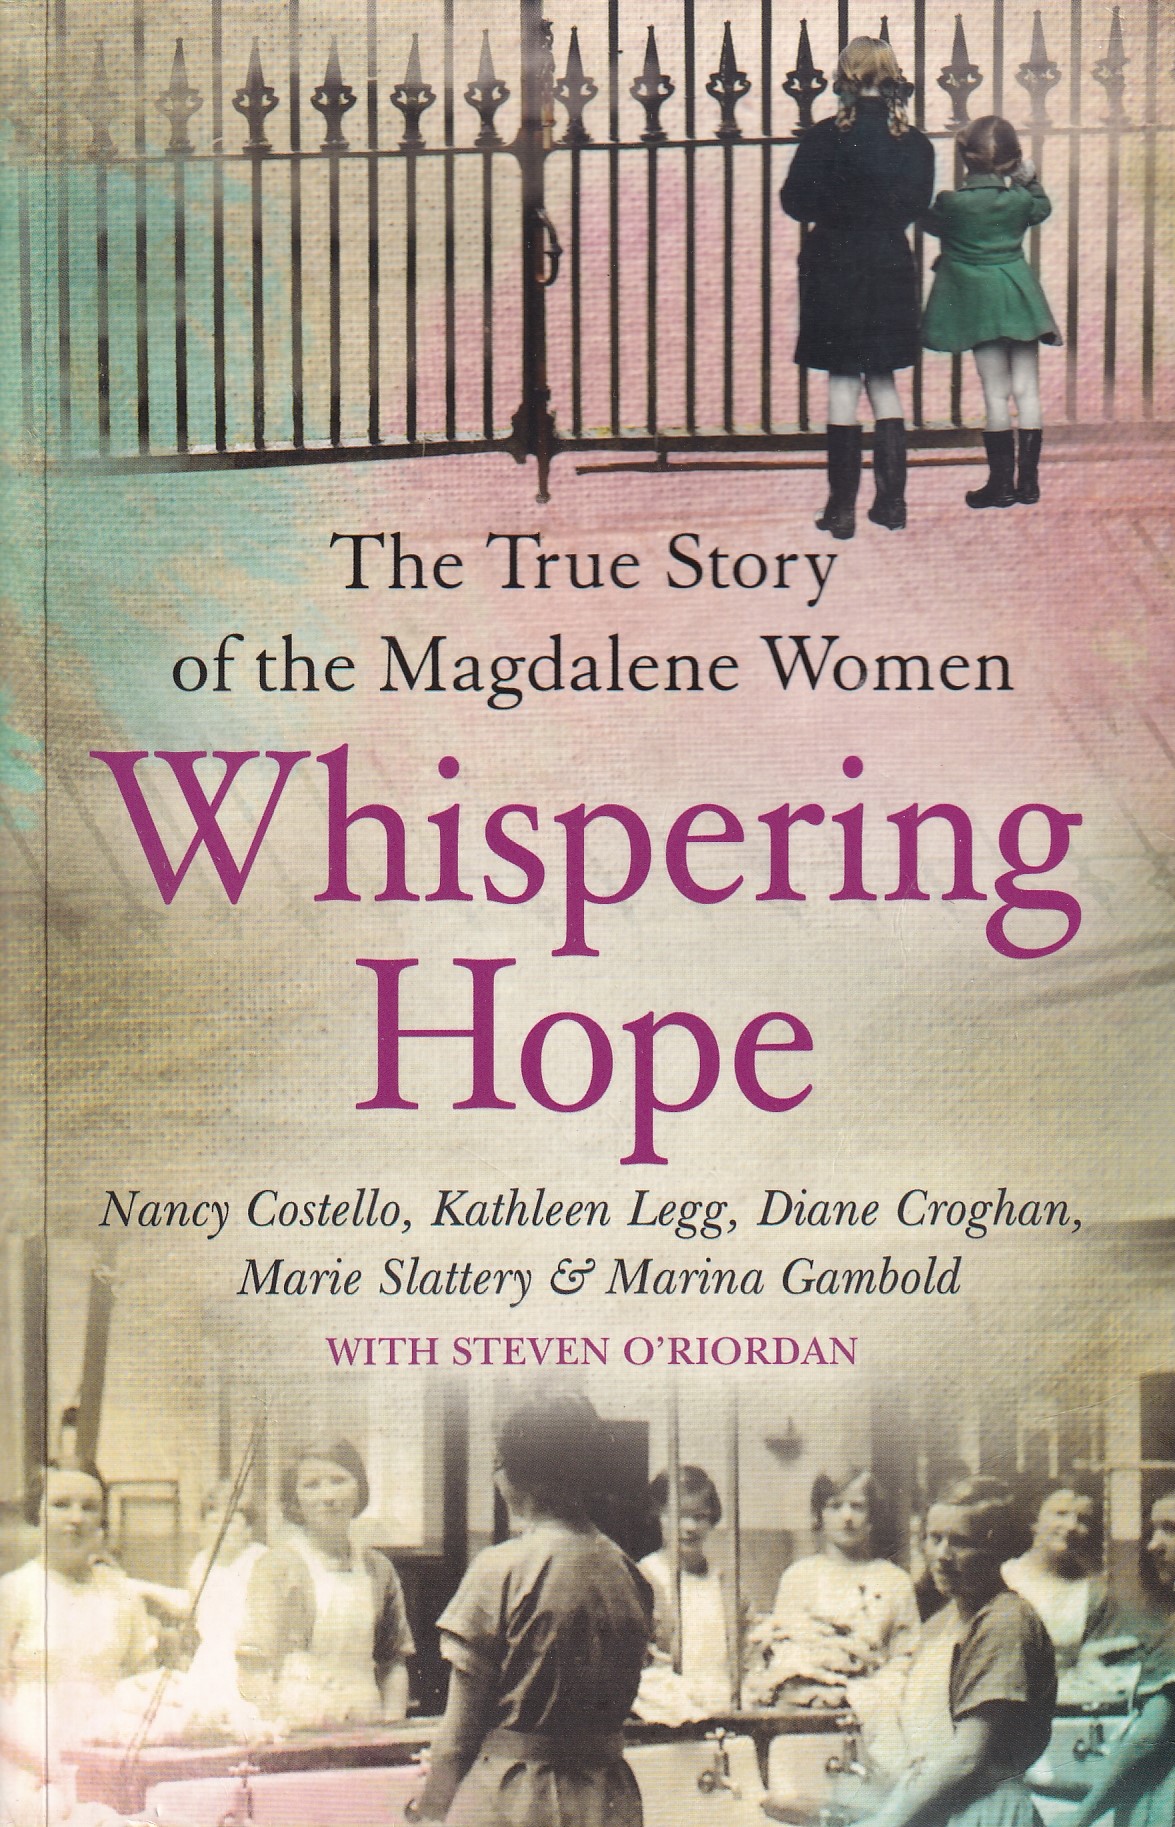 Whispering Hope: The True Story of the Magdalene Women by Nancy Costello. Kathleen Legg, Diane Croghan, Marie Slattery & Marina Gambold with Steven O'Riordan